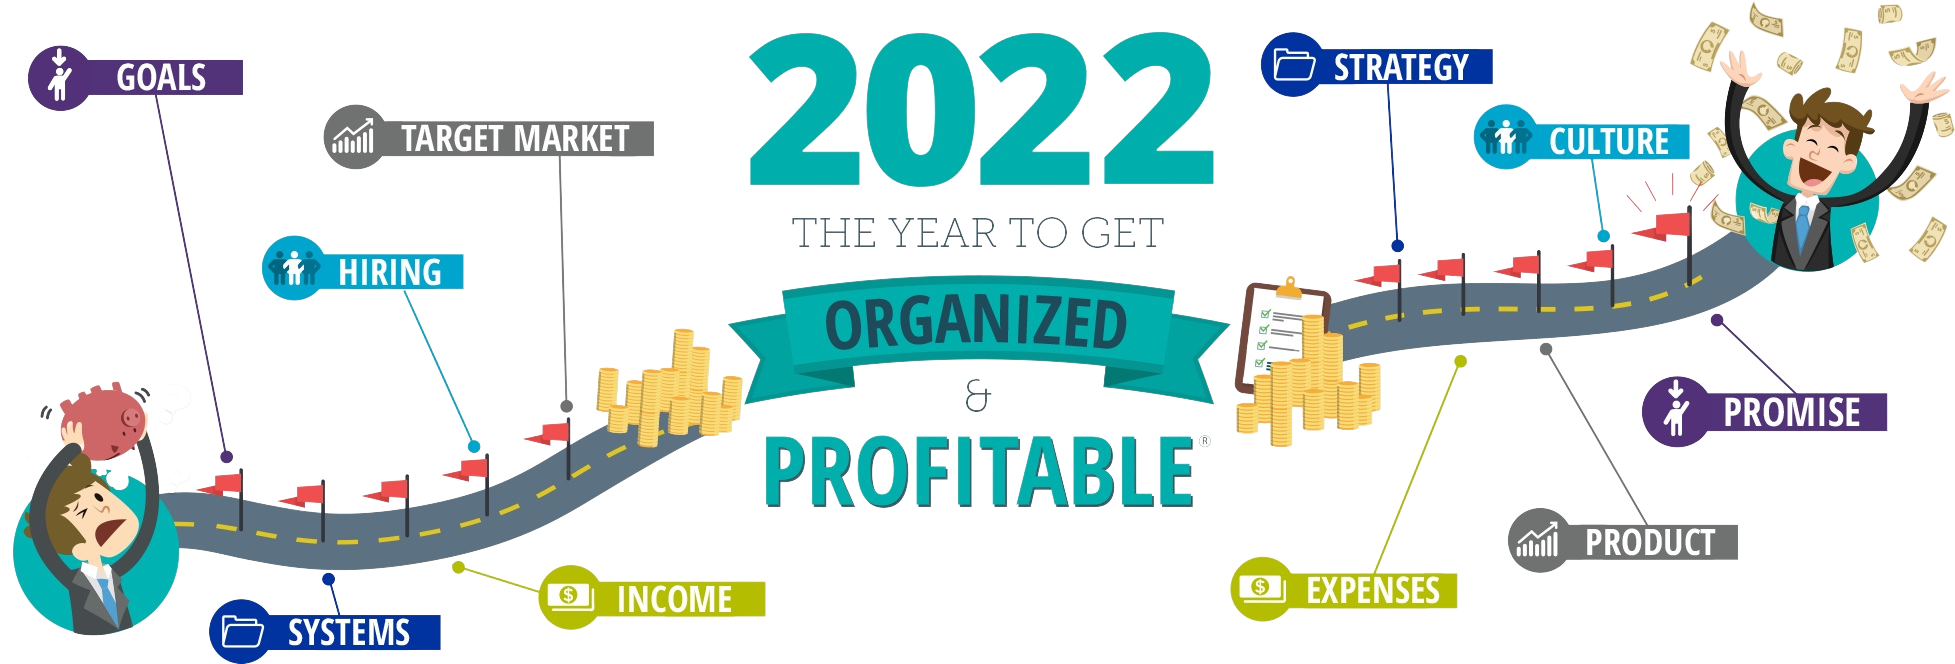 Organized and Profitable_Roadmap_2022